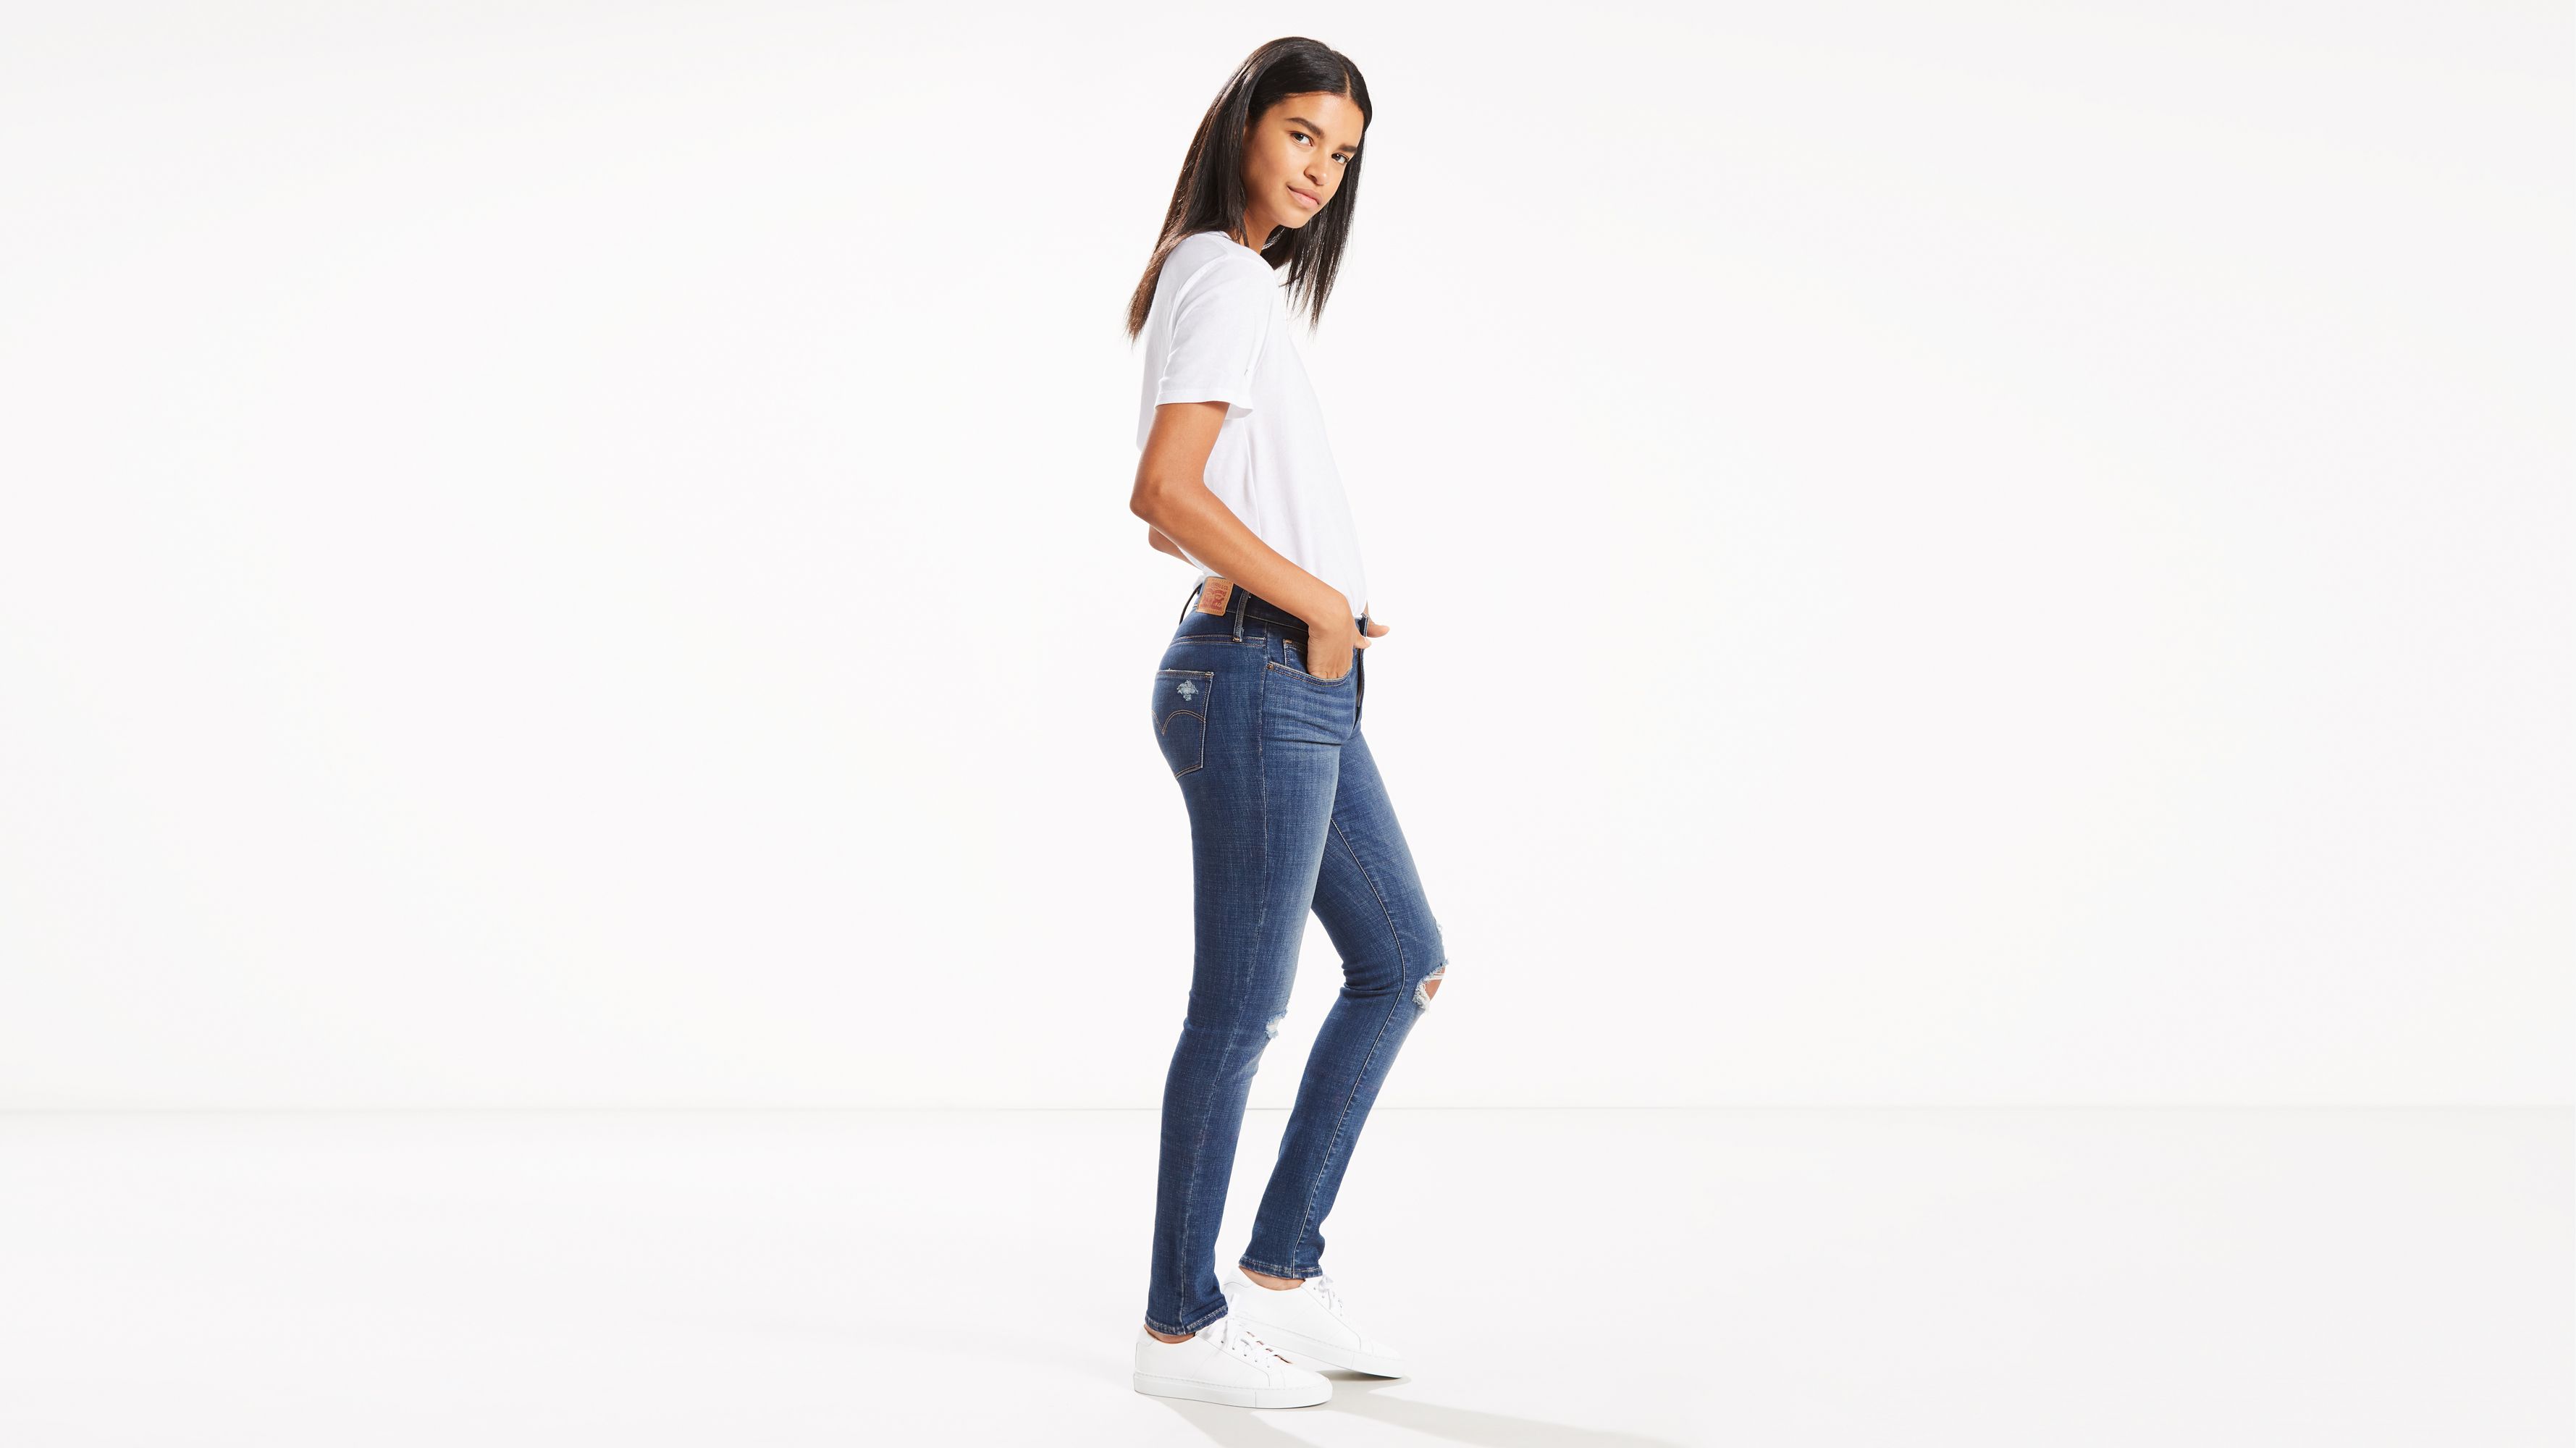 Levis 511 Slim Fit Jeans, Rock Cod, Men's – Urban Industry